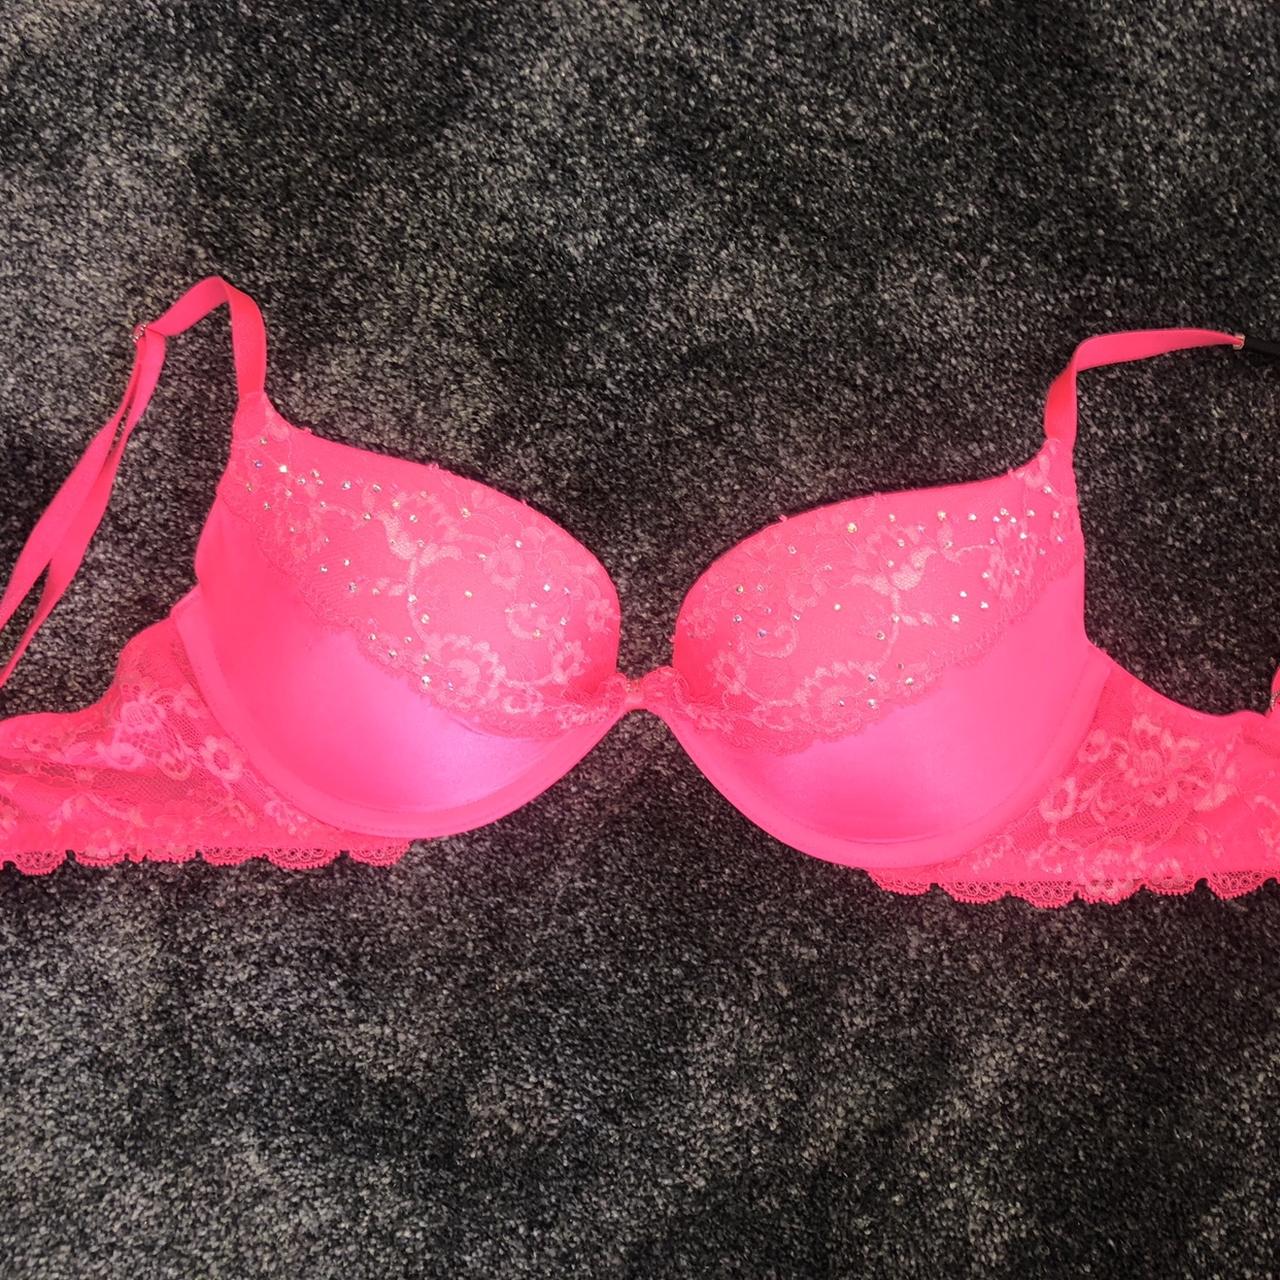 VICTORIA’S SECRET neon pink bra. Gorgeous colour and